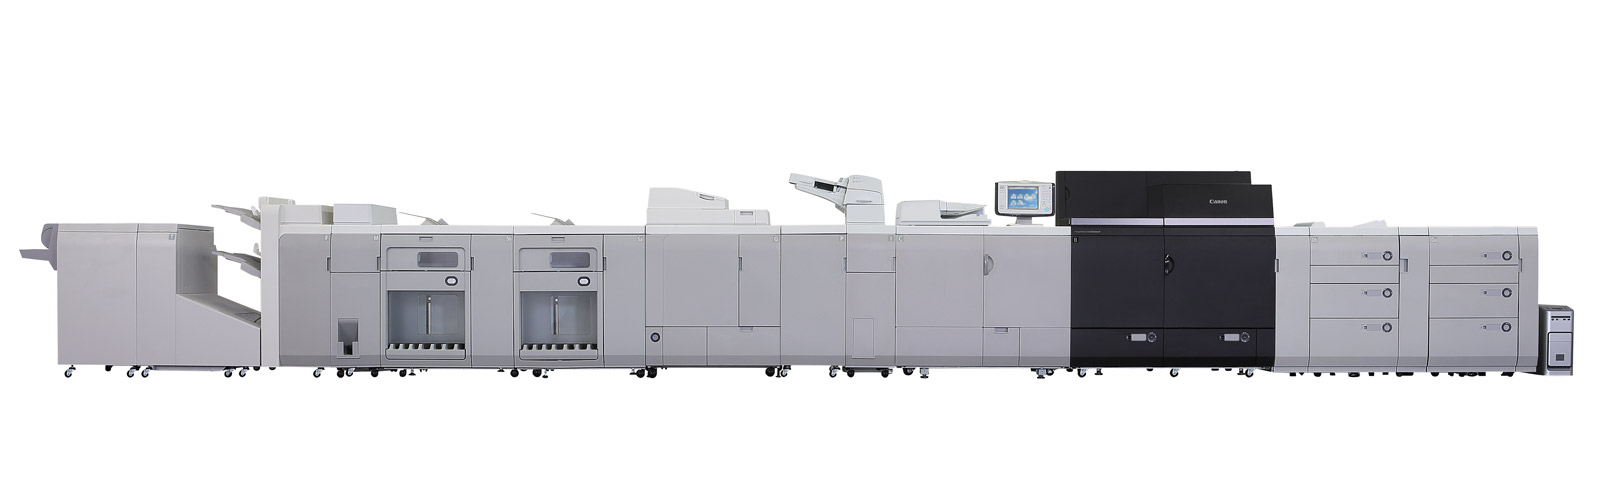 Canon imagePRESS C10000VP Production Print System